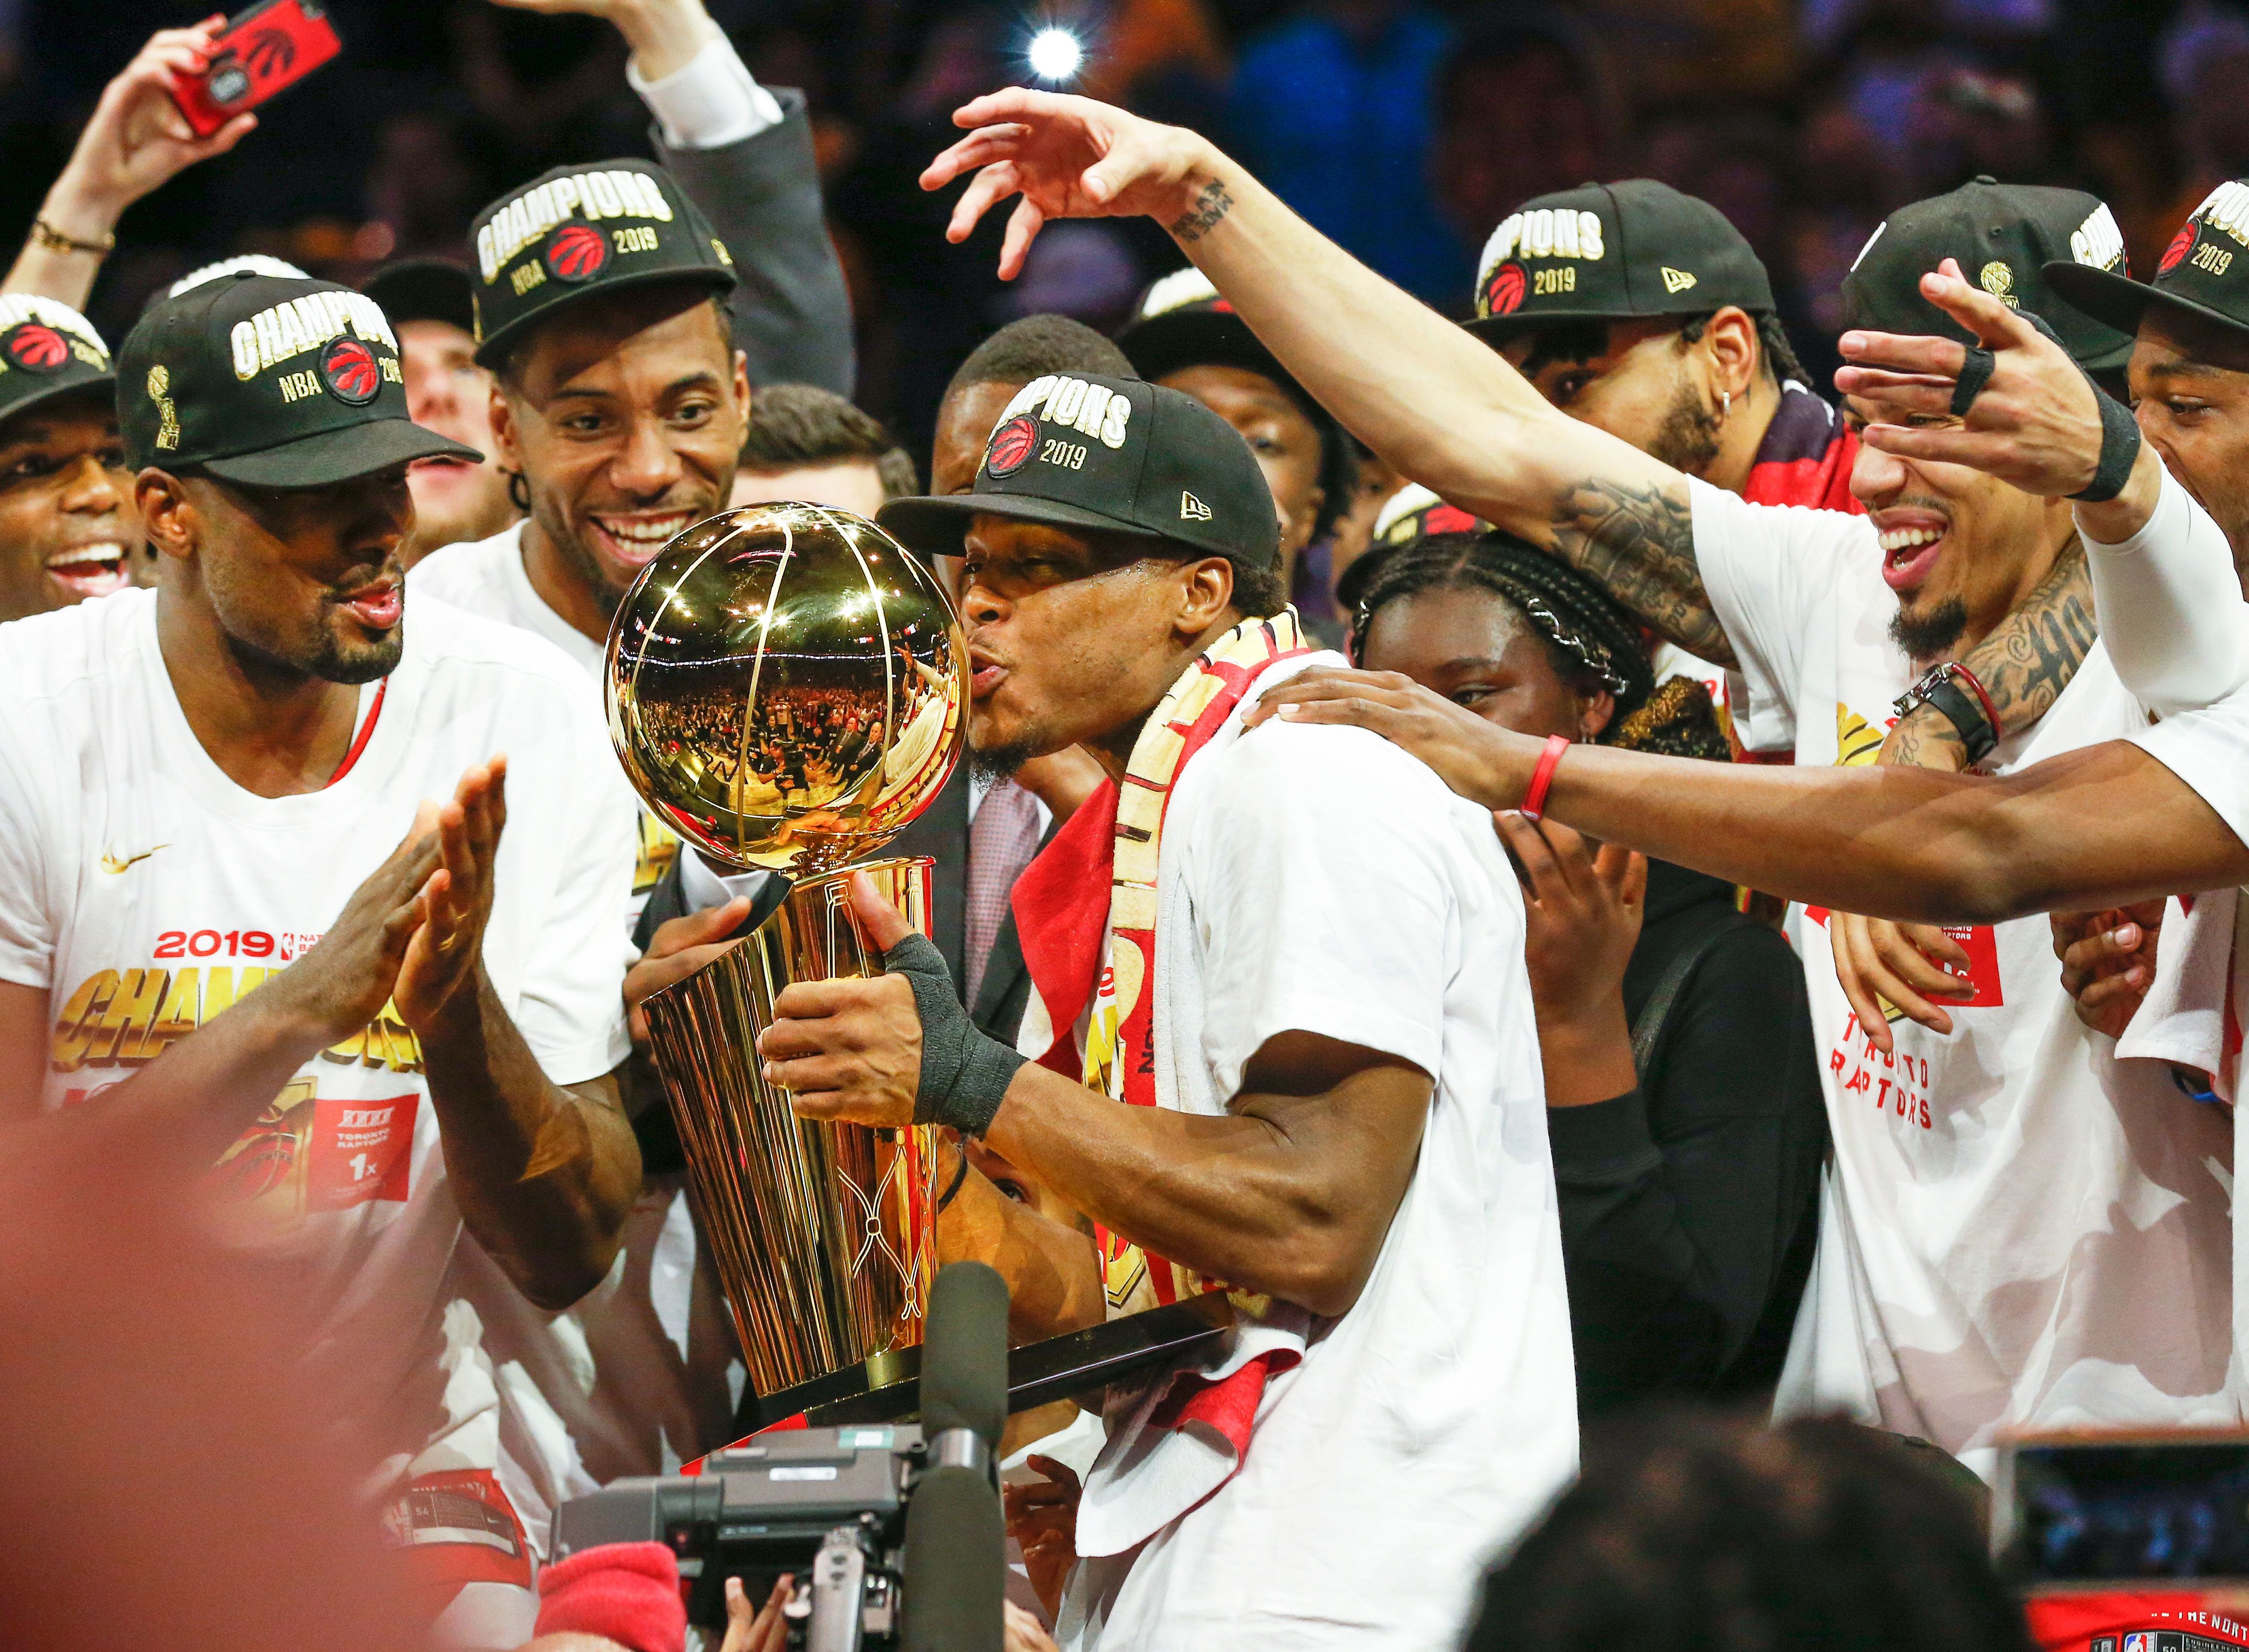 Toronto Raptors beat Golden State Warriors to win first NBA title